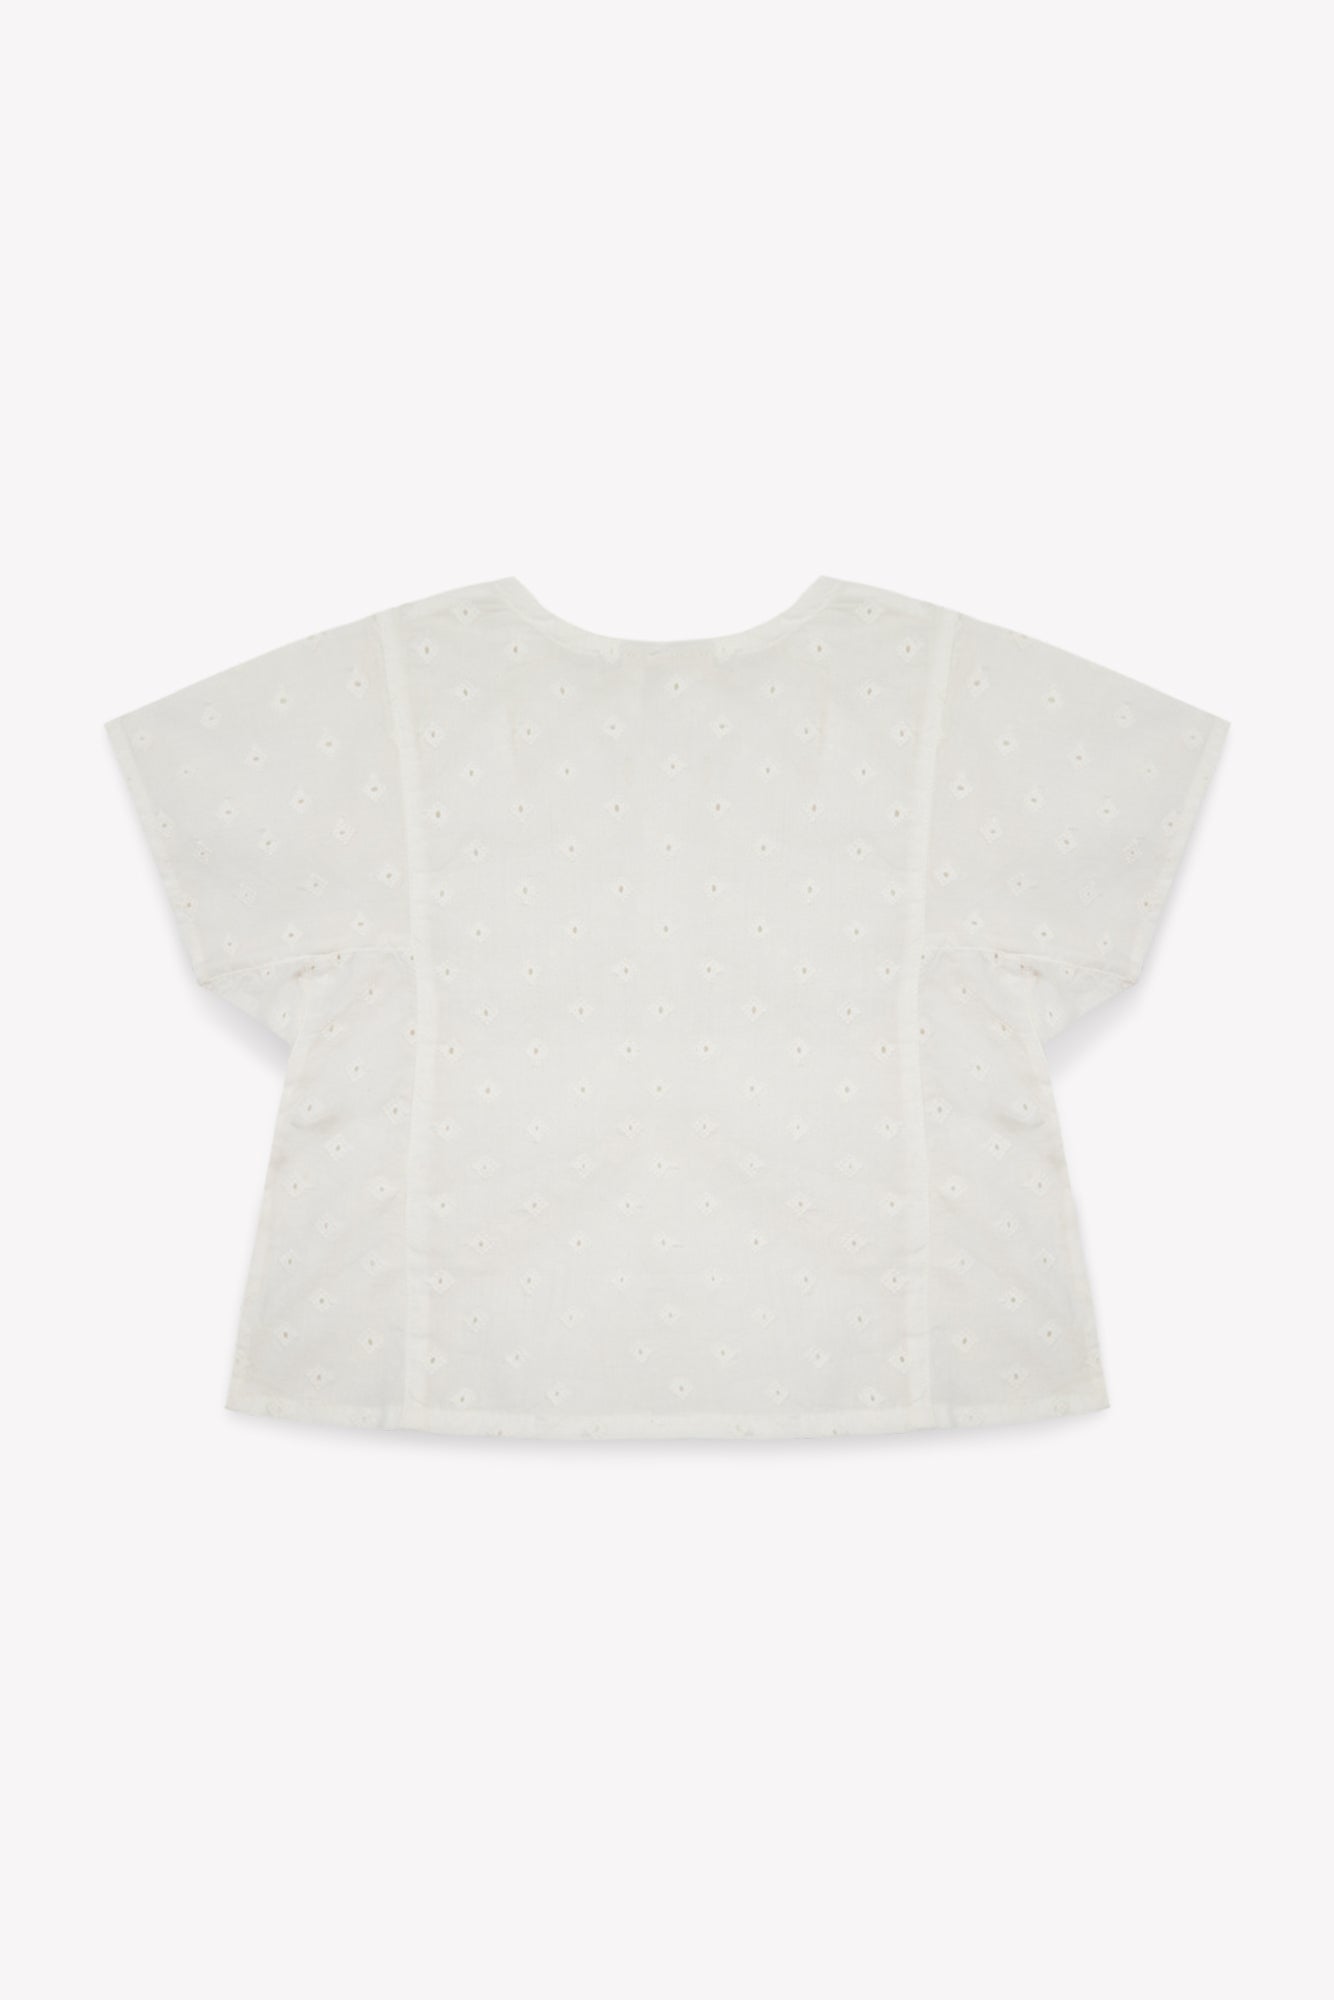 Blouse - White Kurta Baby Cotton shaped